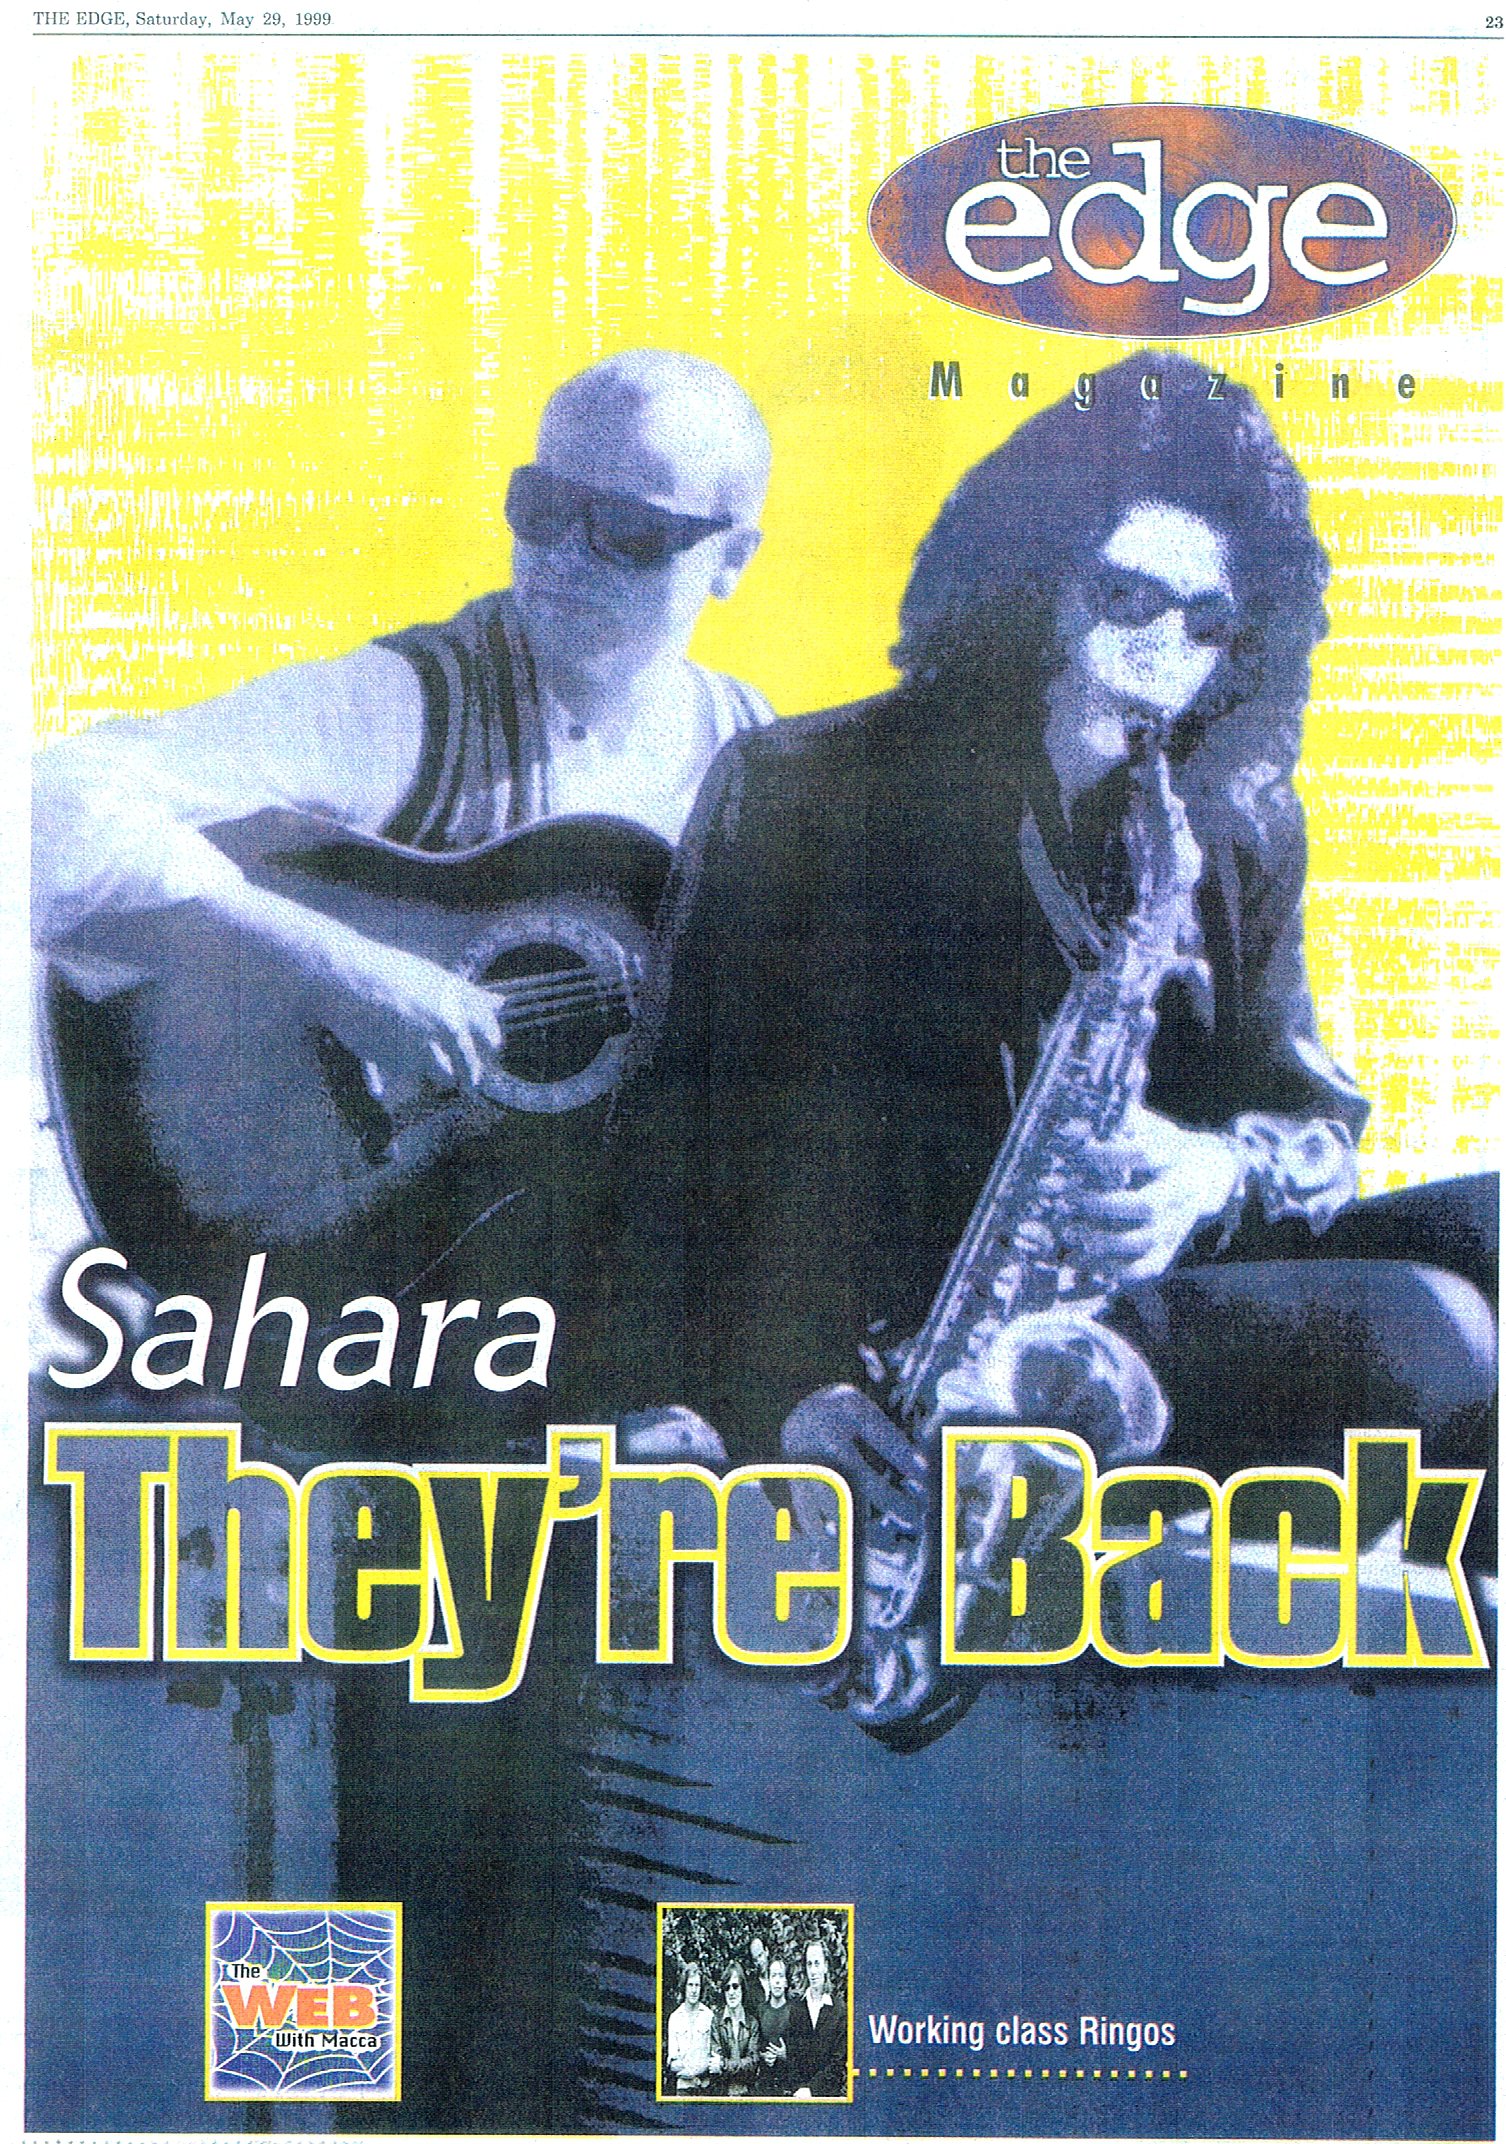 Dave Long & Trish Long 'Sahara' on front page of The Edge Bendigo